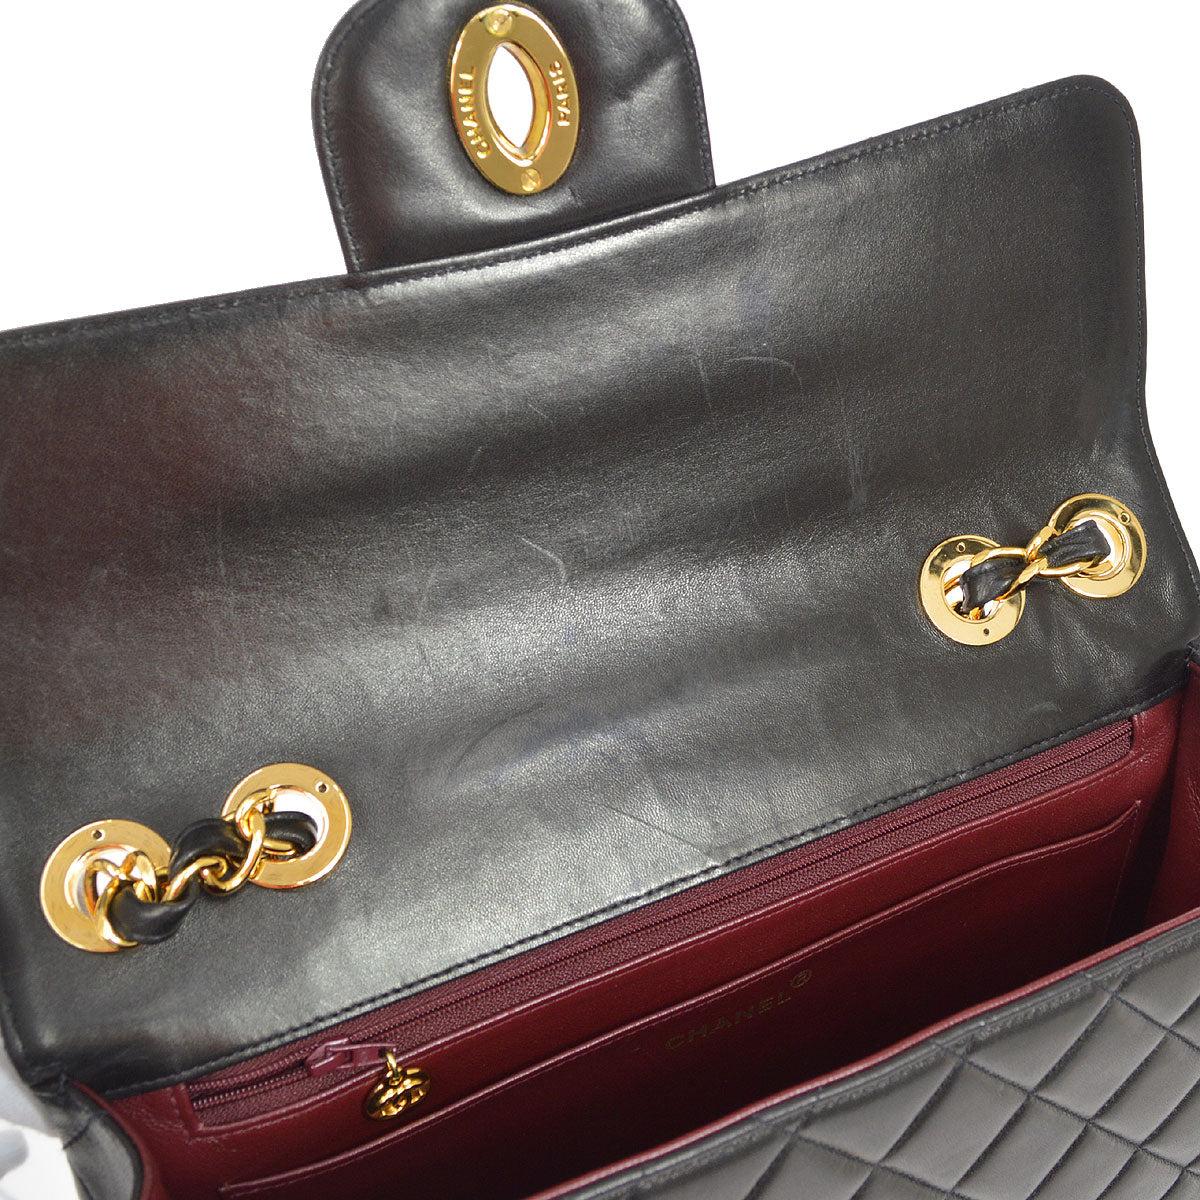 CHANEL Black Lambskin Leather Large Gold CC Jumbo Shoulder Flap Bag For Sale 2